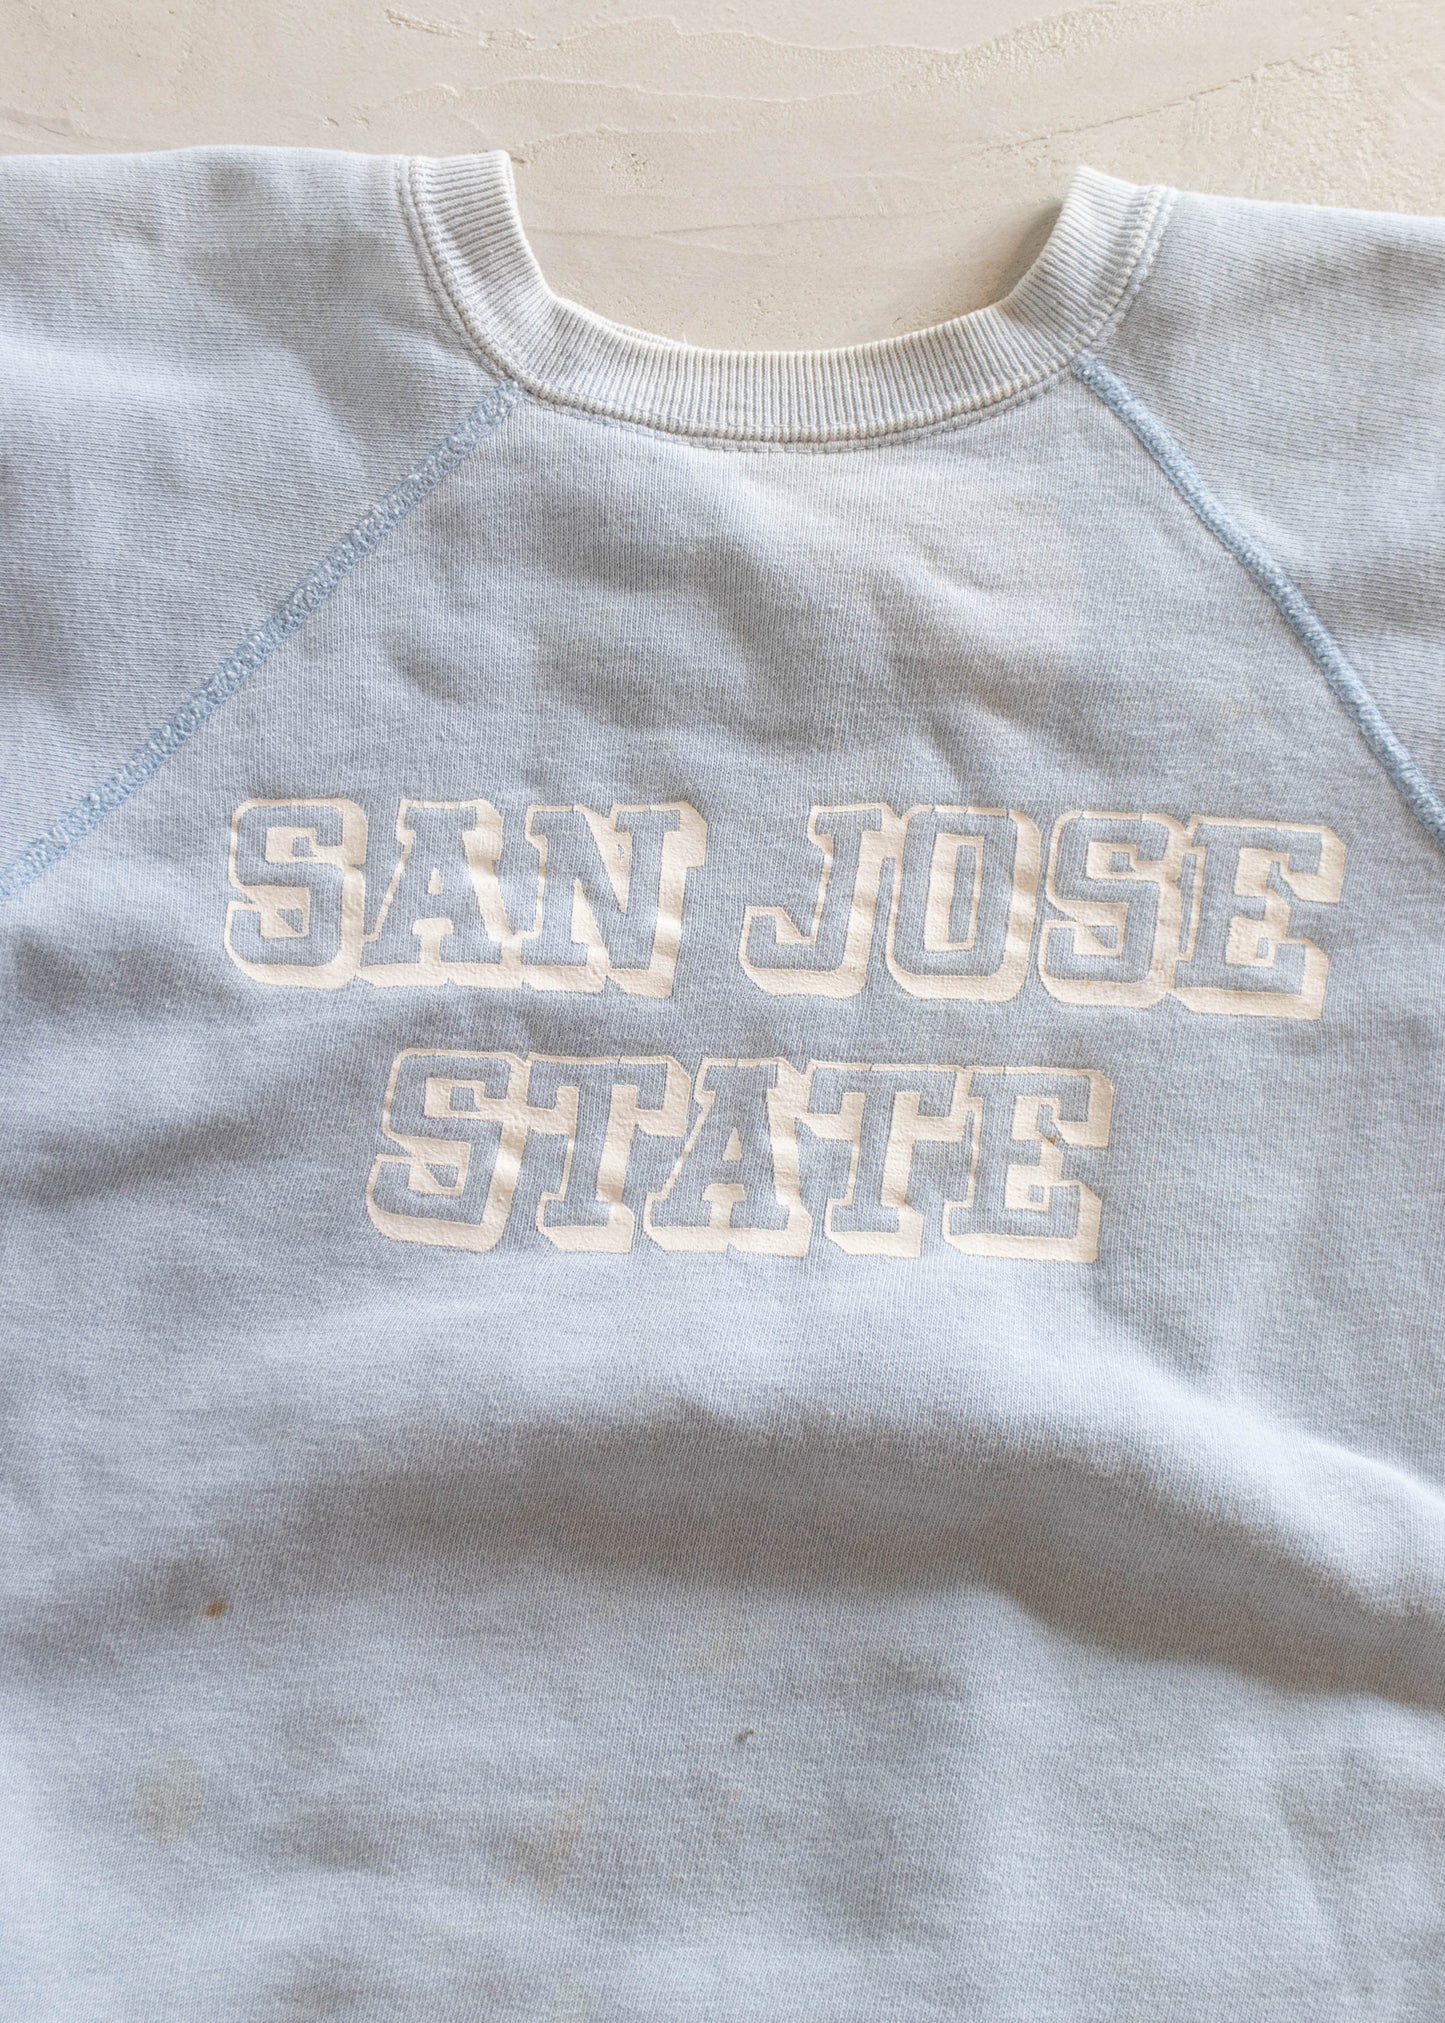 1960s San Jose State Short Sleeve Sweatshirt Size S/M